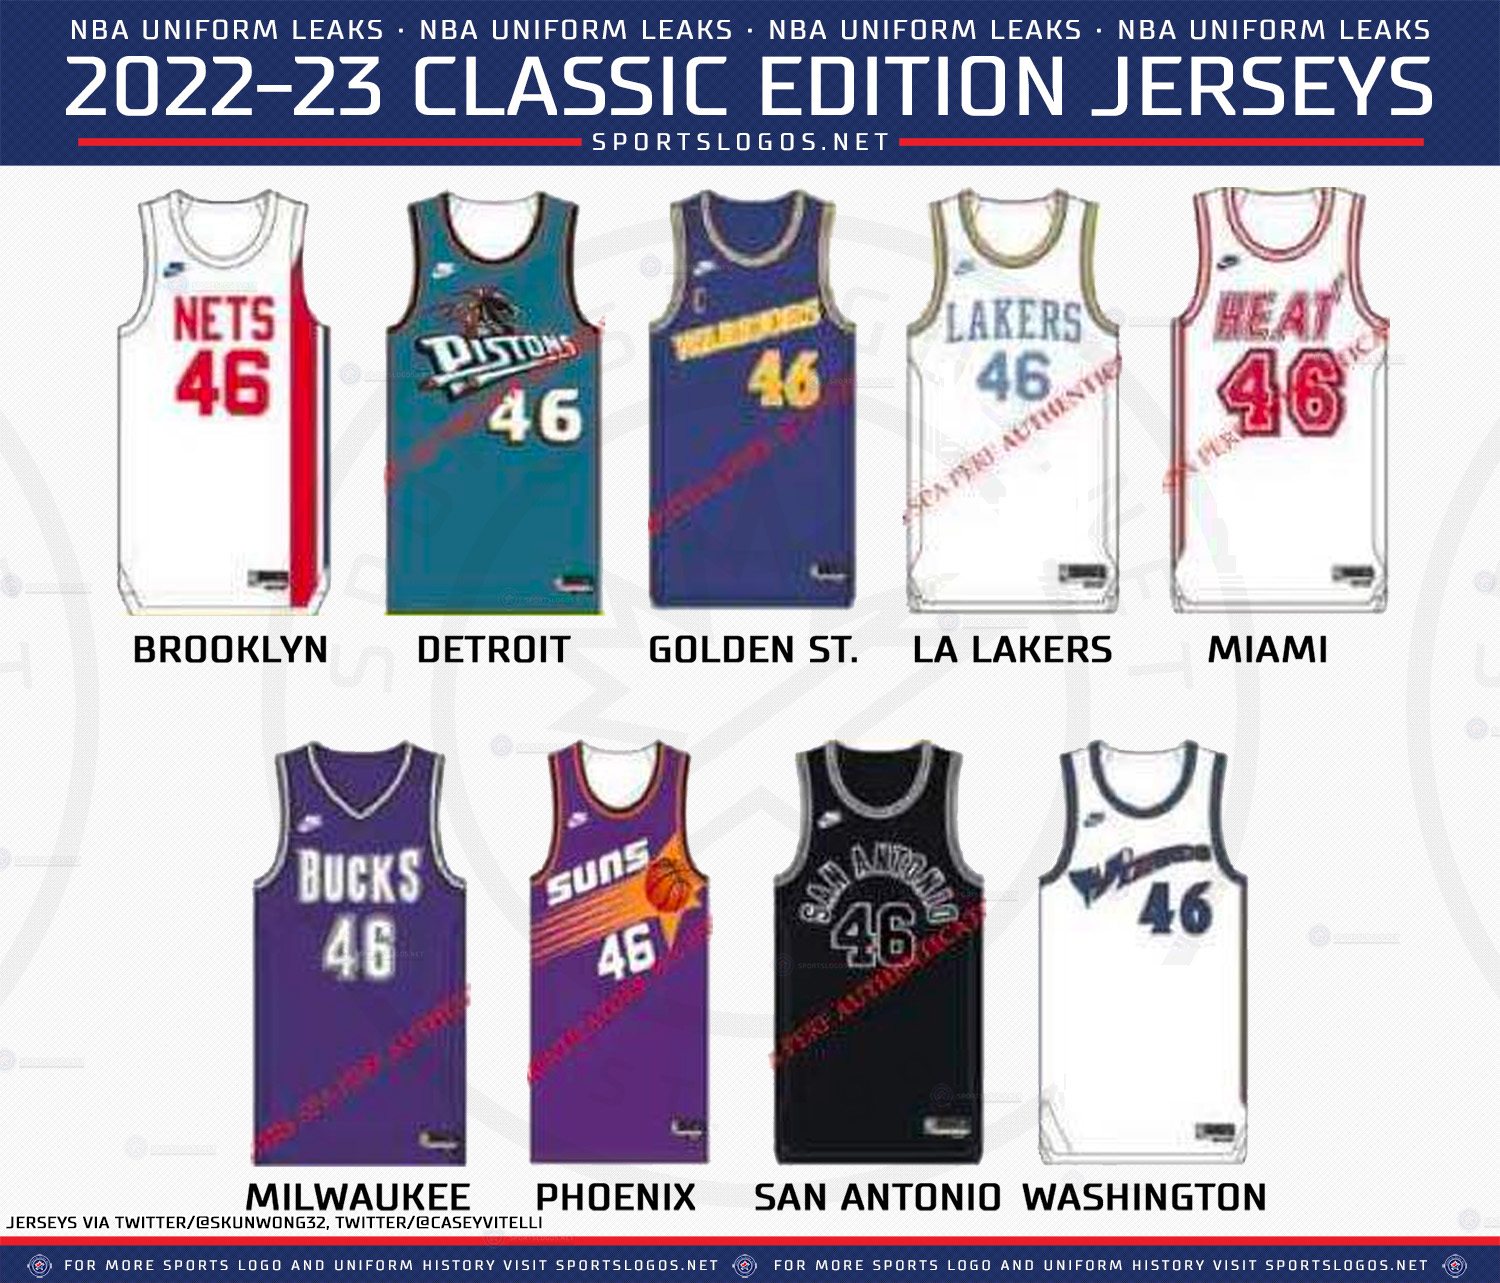 2022 NBA All-Star Game jerseys leak online